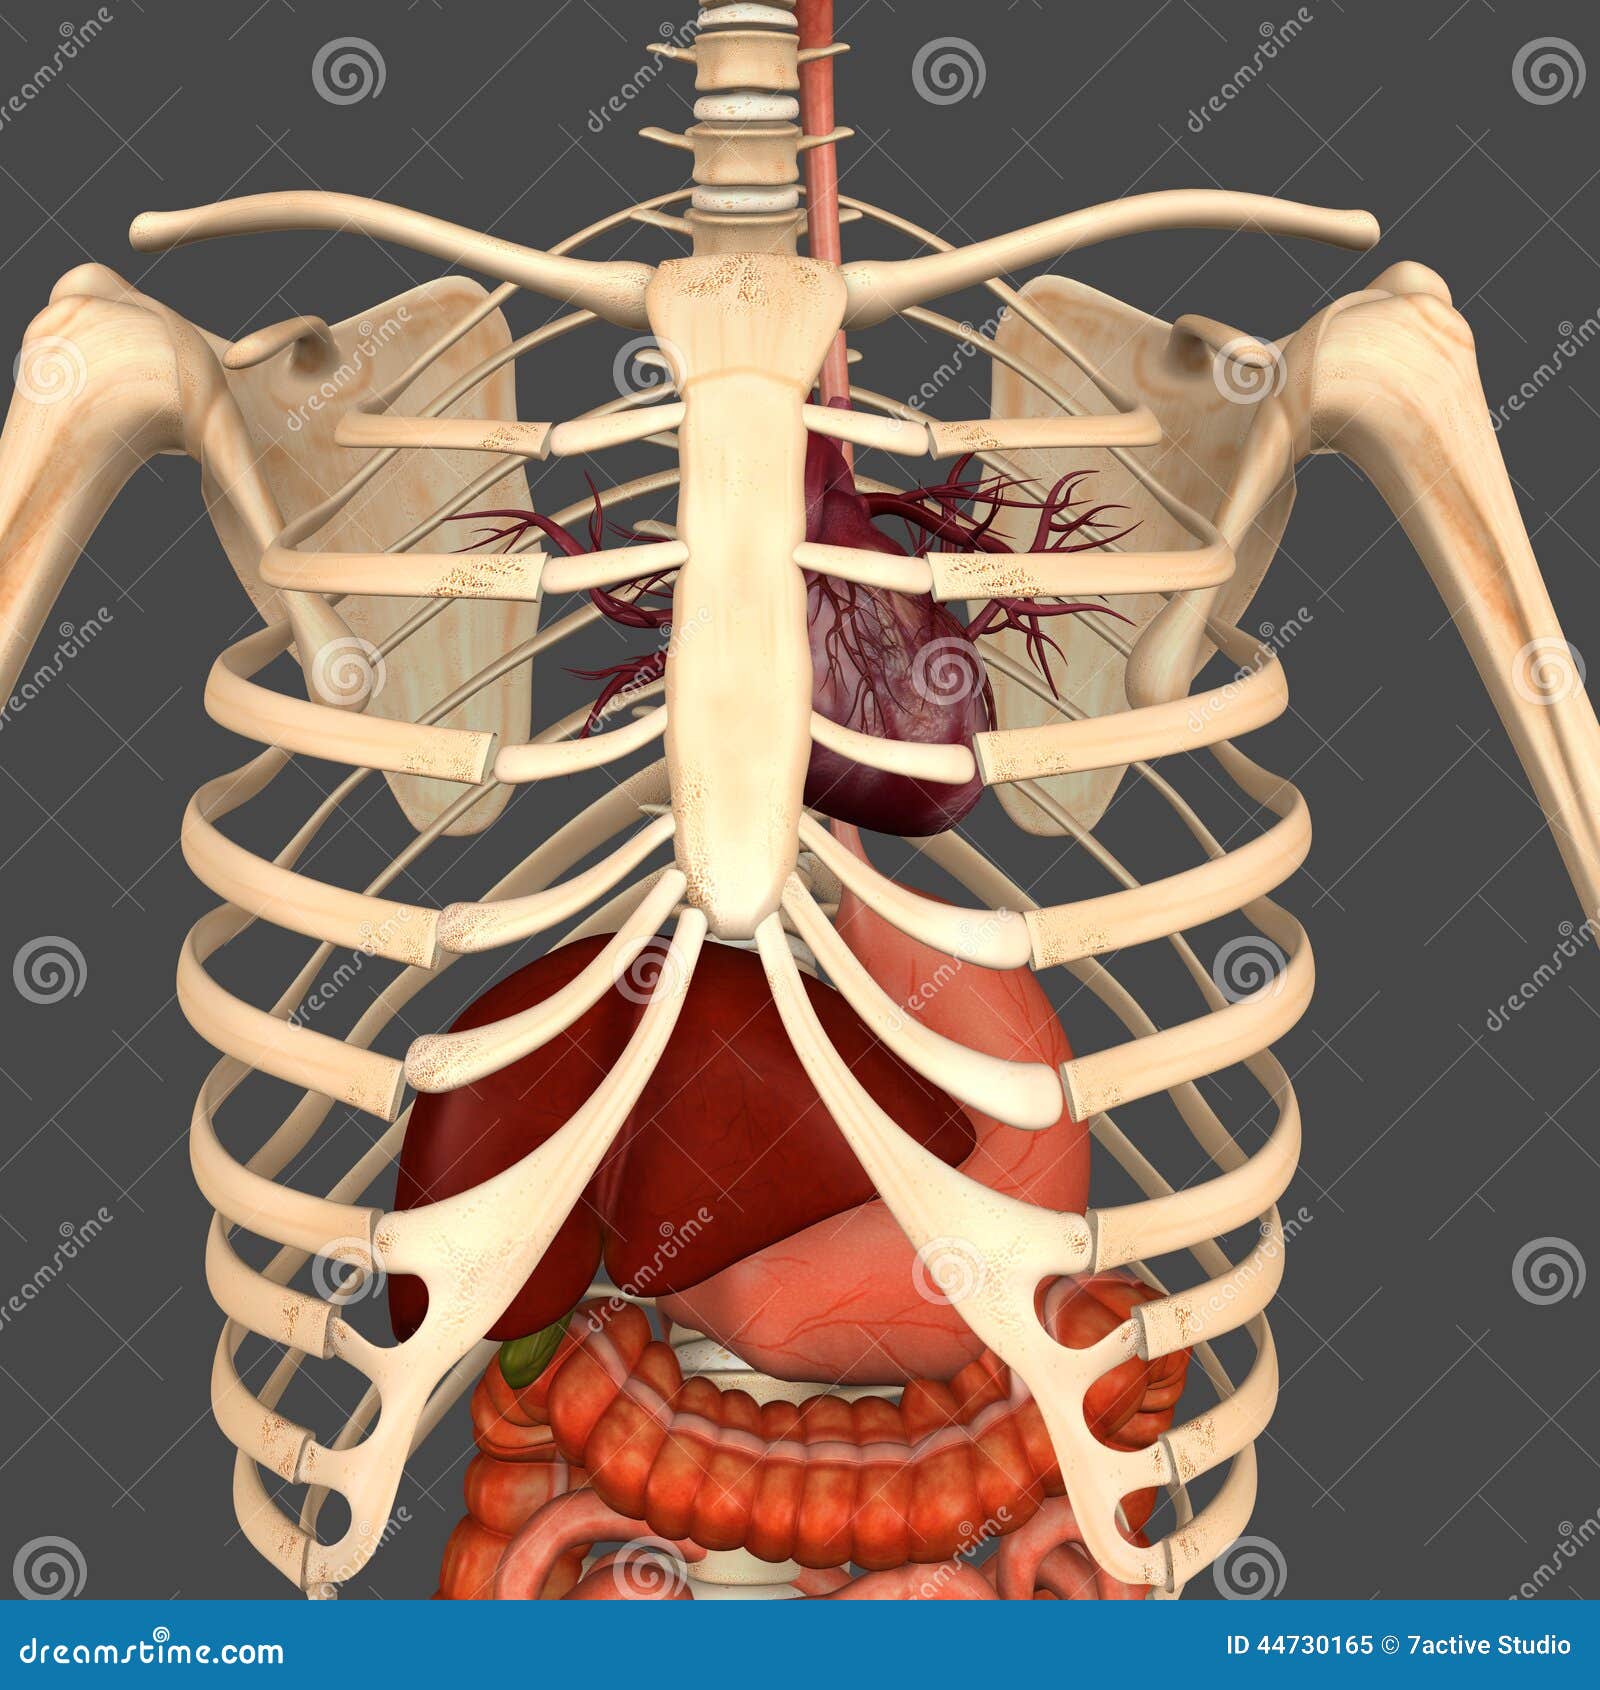 Digestive system stock illustration. Illustration of isolated - 44730165